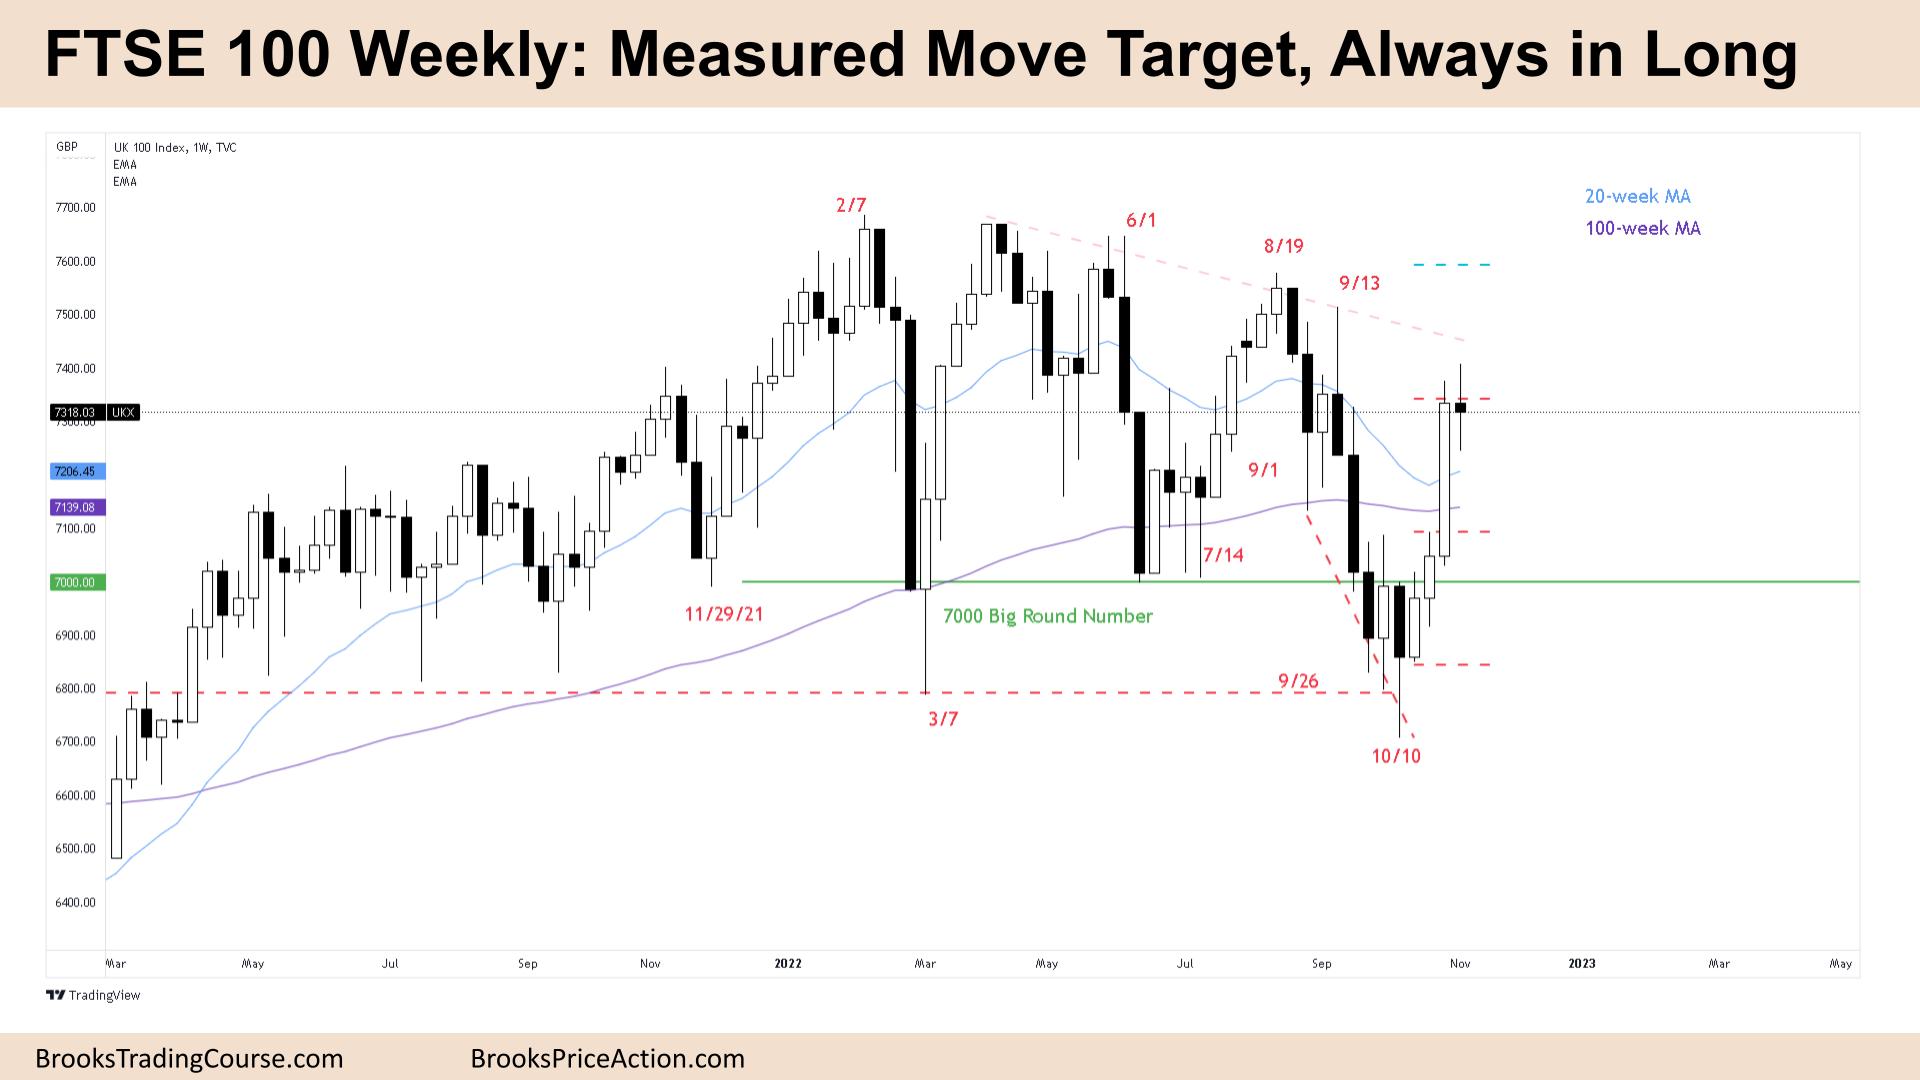 FTSE 100 Measured Move Target Always in Long